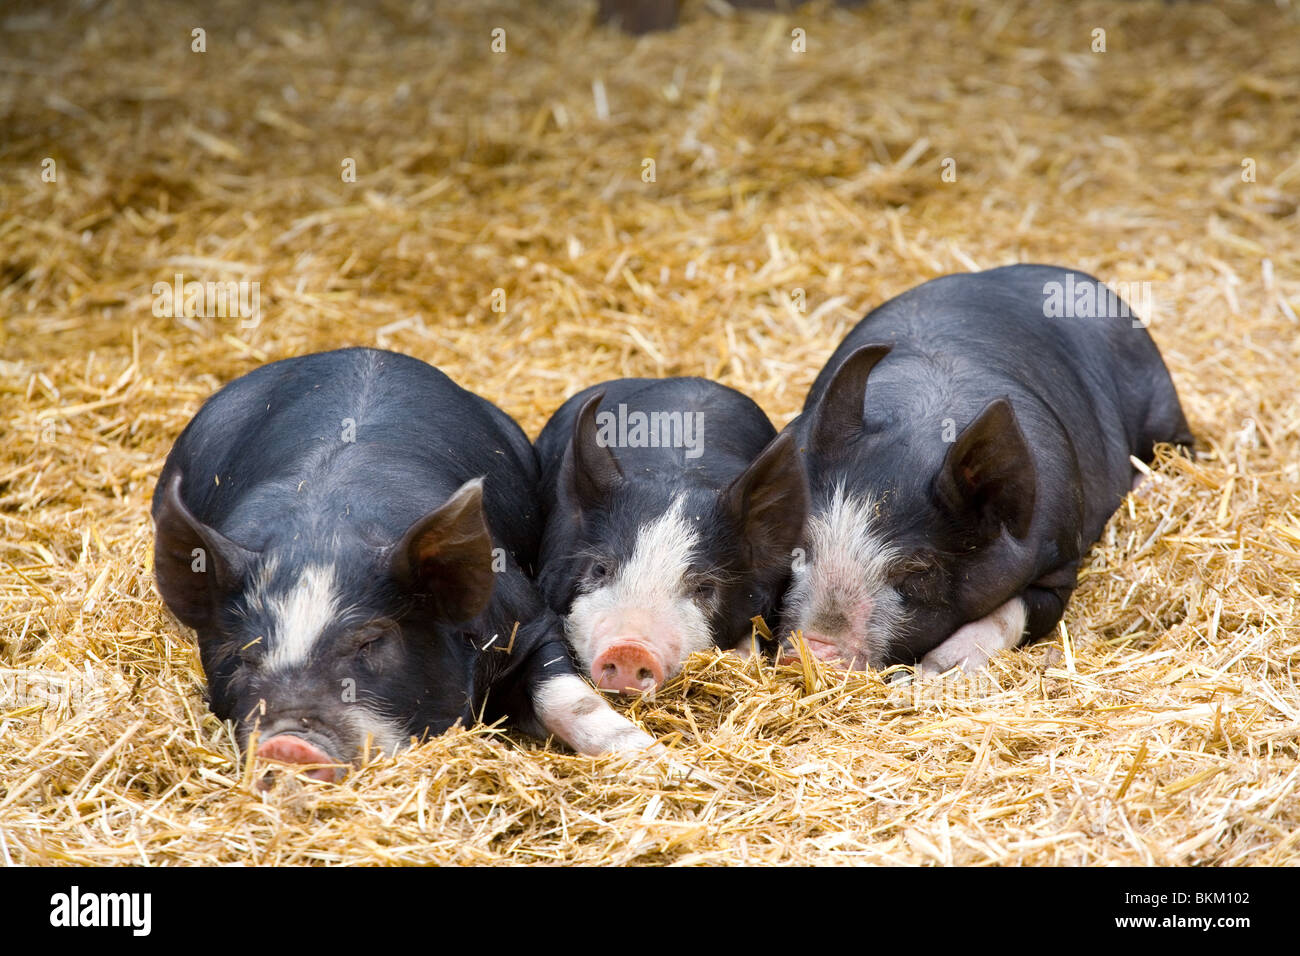 Trois petits porcs domestiques Banque D'Images